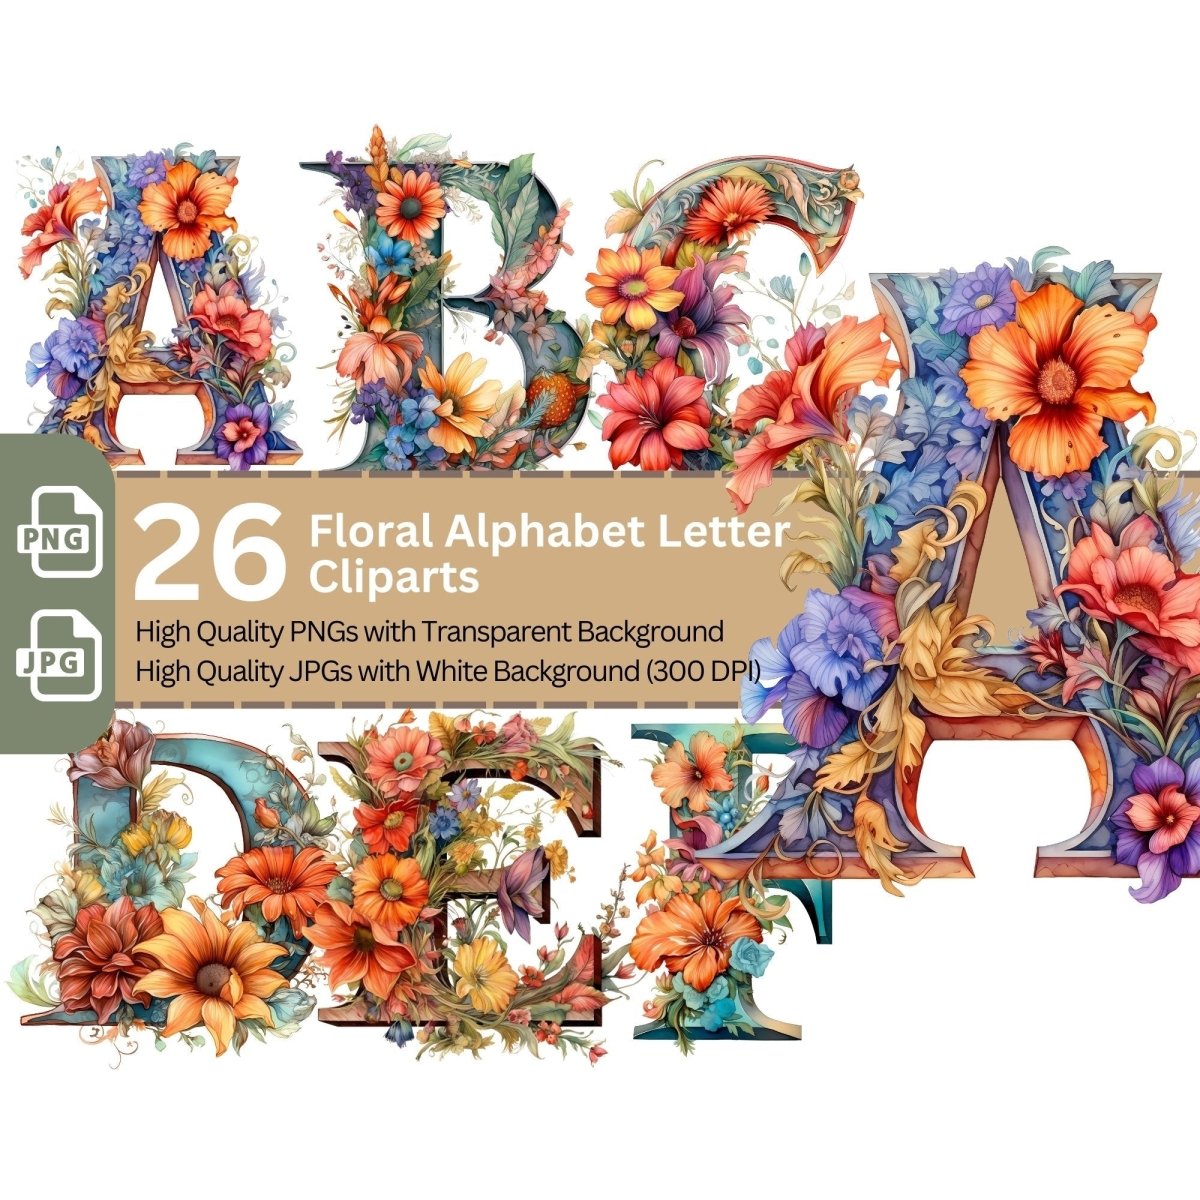 Floral Alphabet 26+26 PNG Clip Art Bundle Fancy Letters for Invitation Cards - Everything Pixel